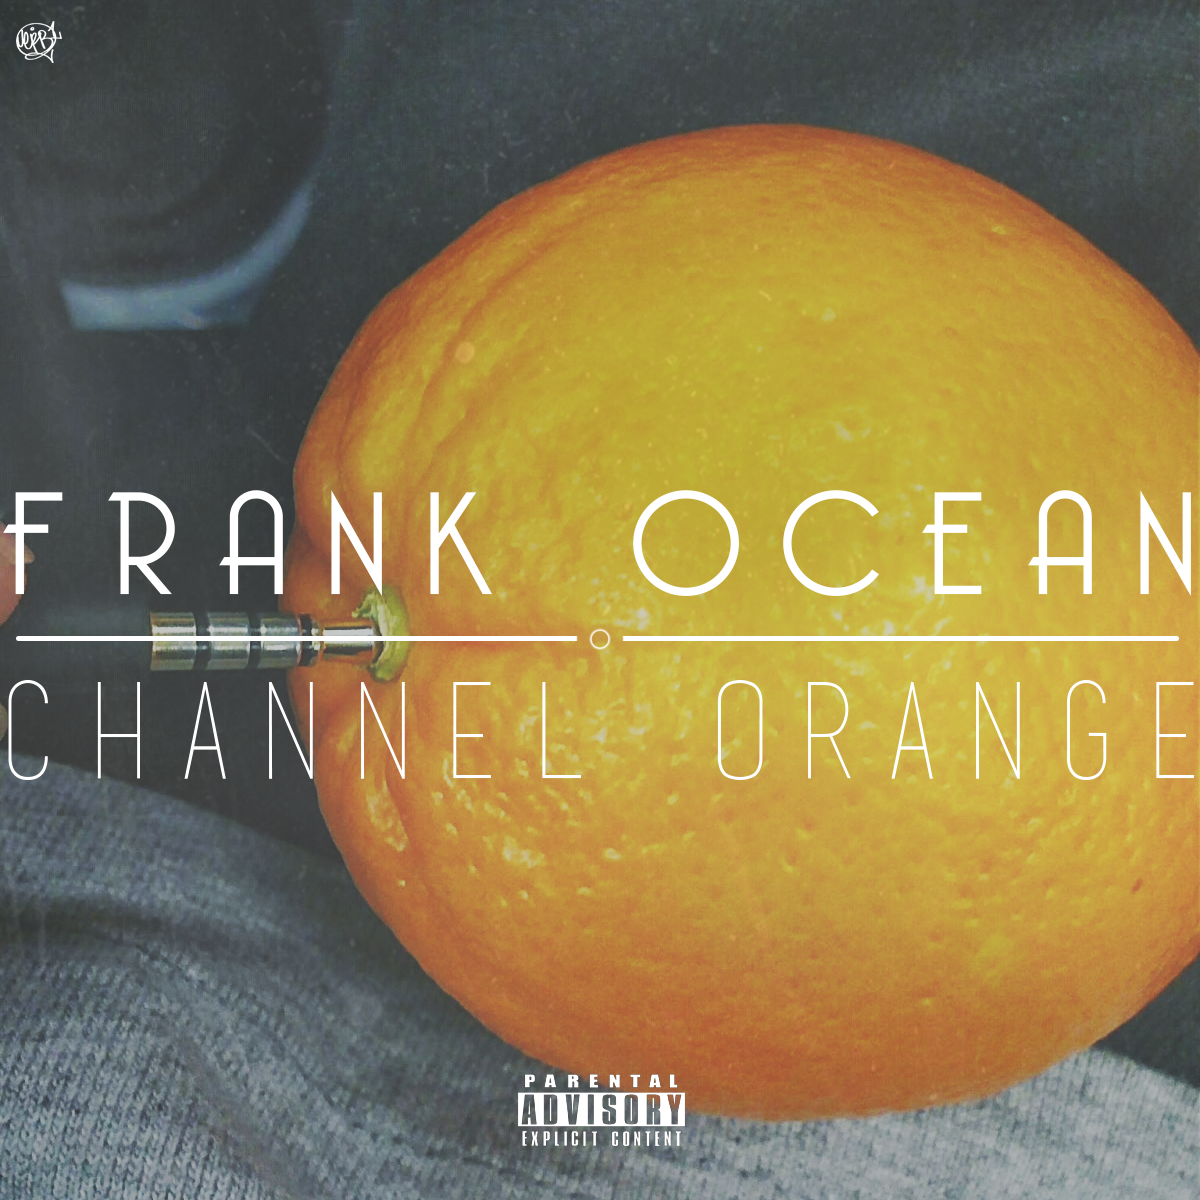 Steezy Blog Frank Ocean "Channel Orange" Album Cover